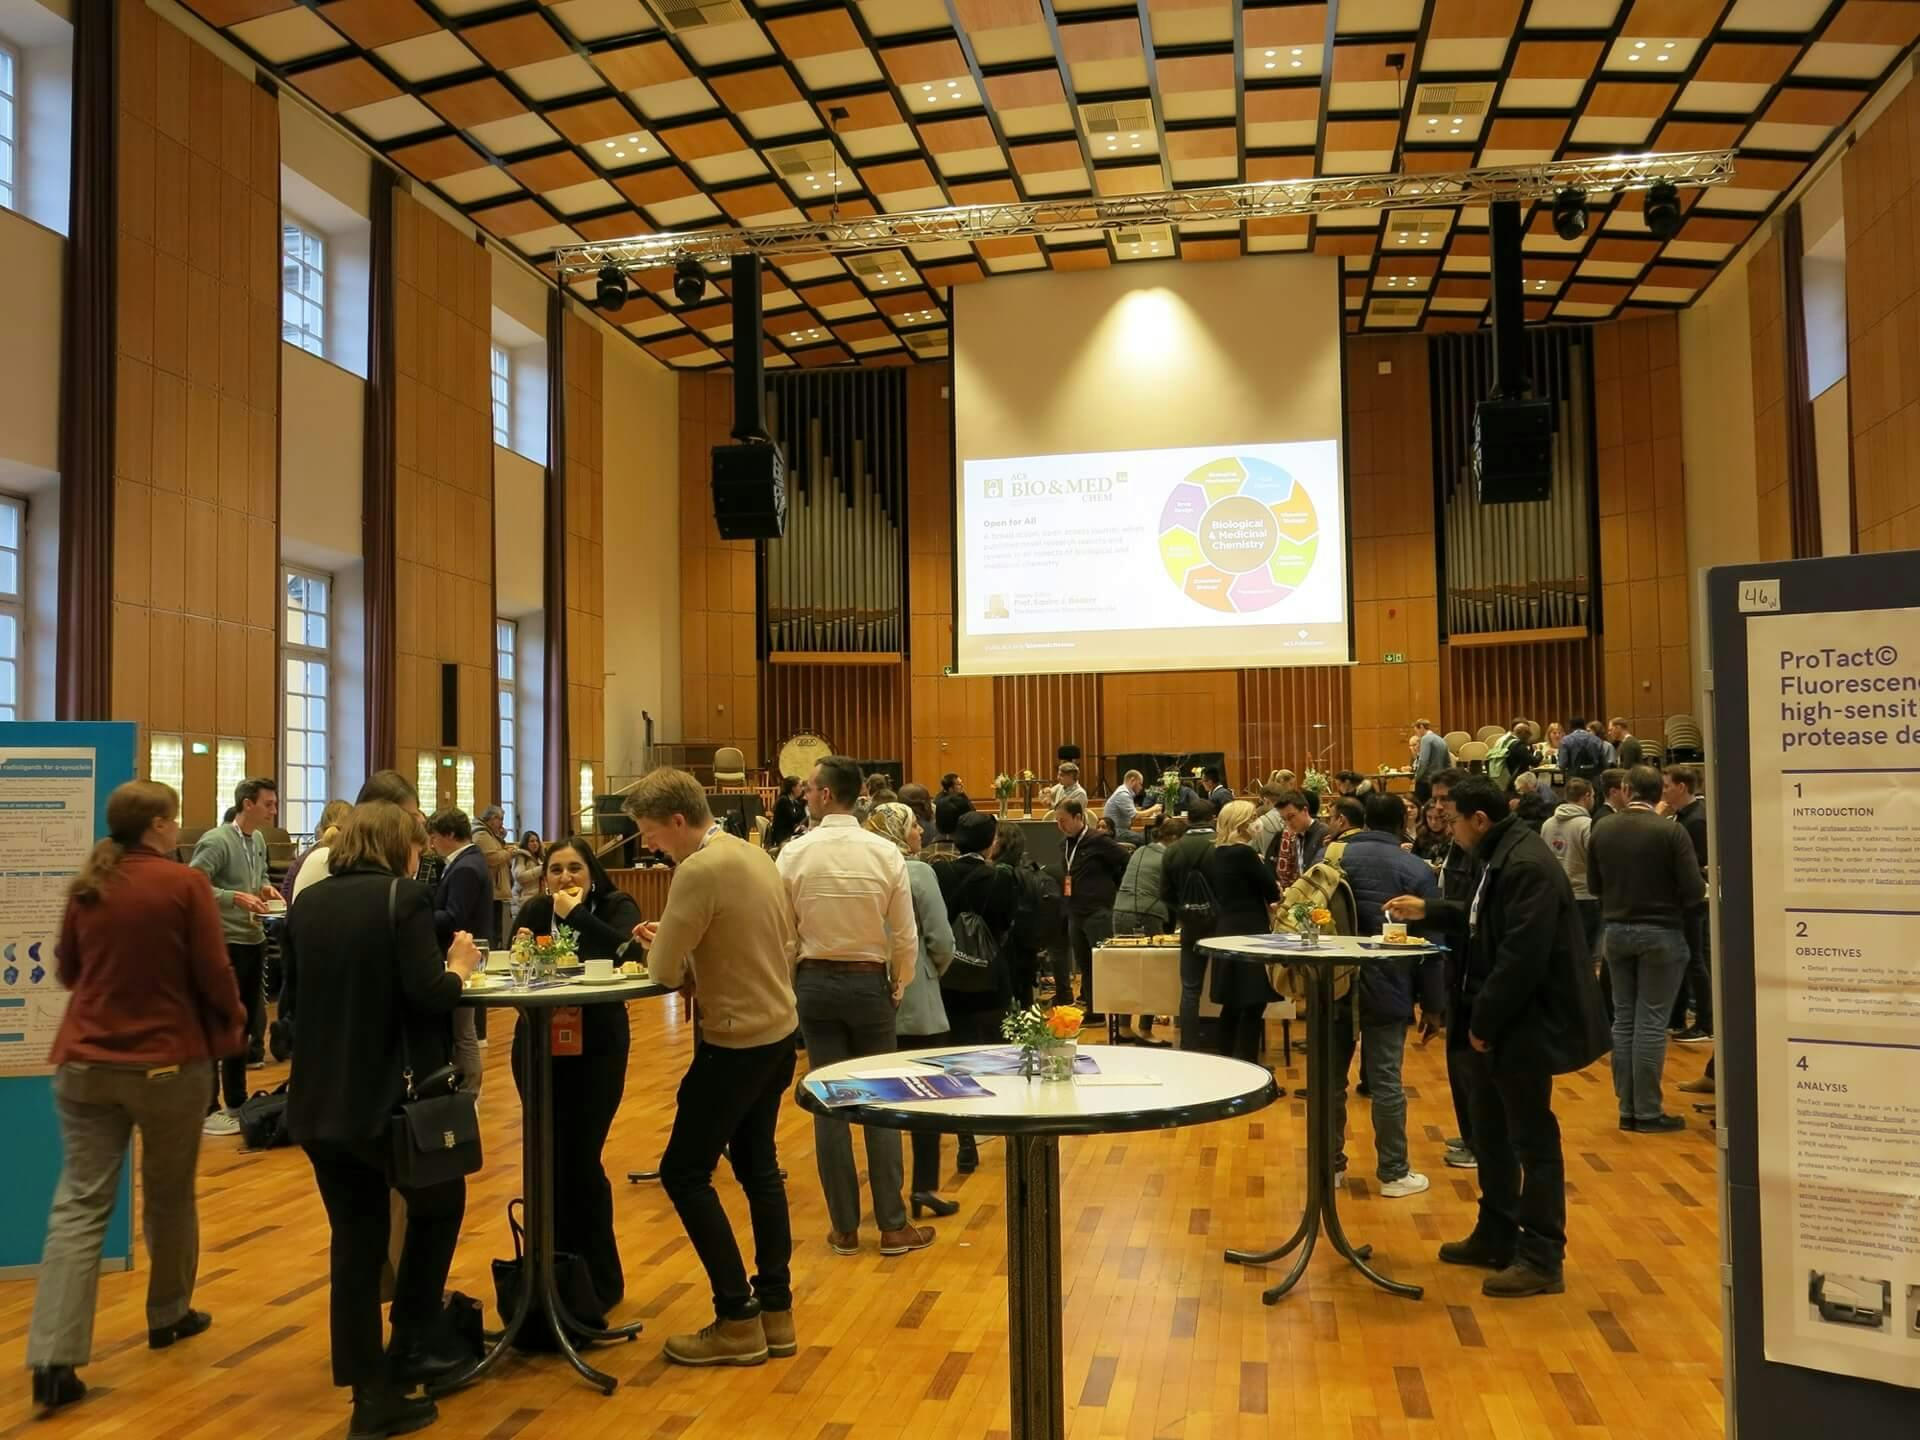 Bonn Symposium poster presentation and reception